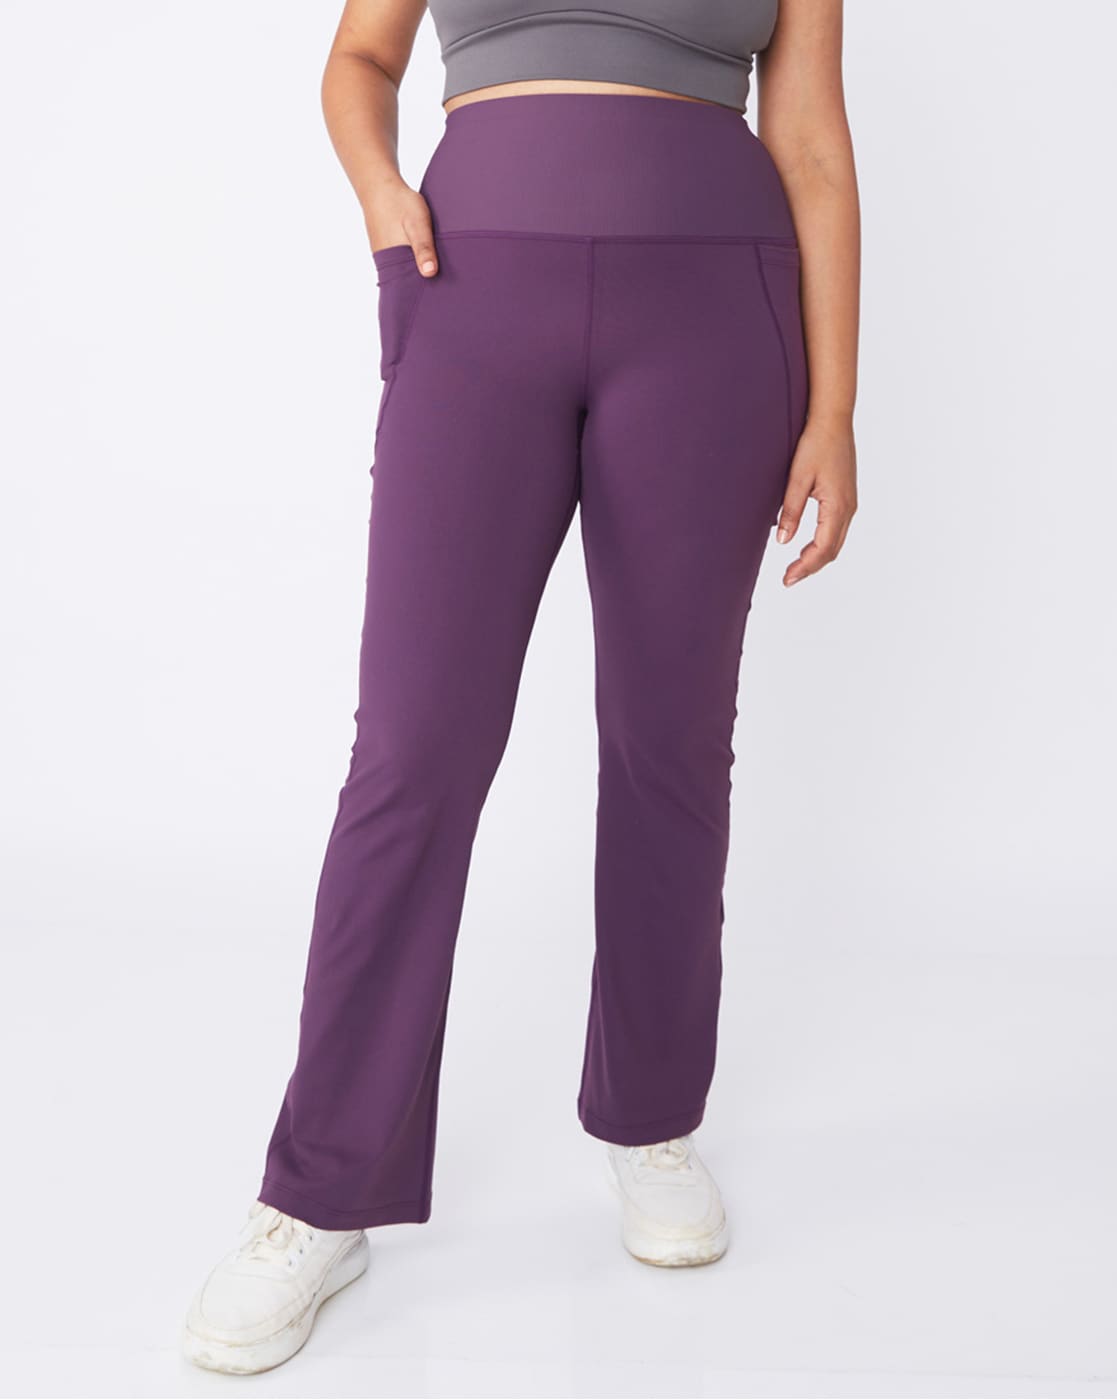 Four Color Combinations with Dark Purple Pants  Pumps  Push Ups